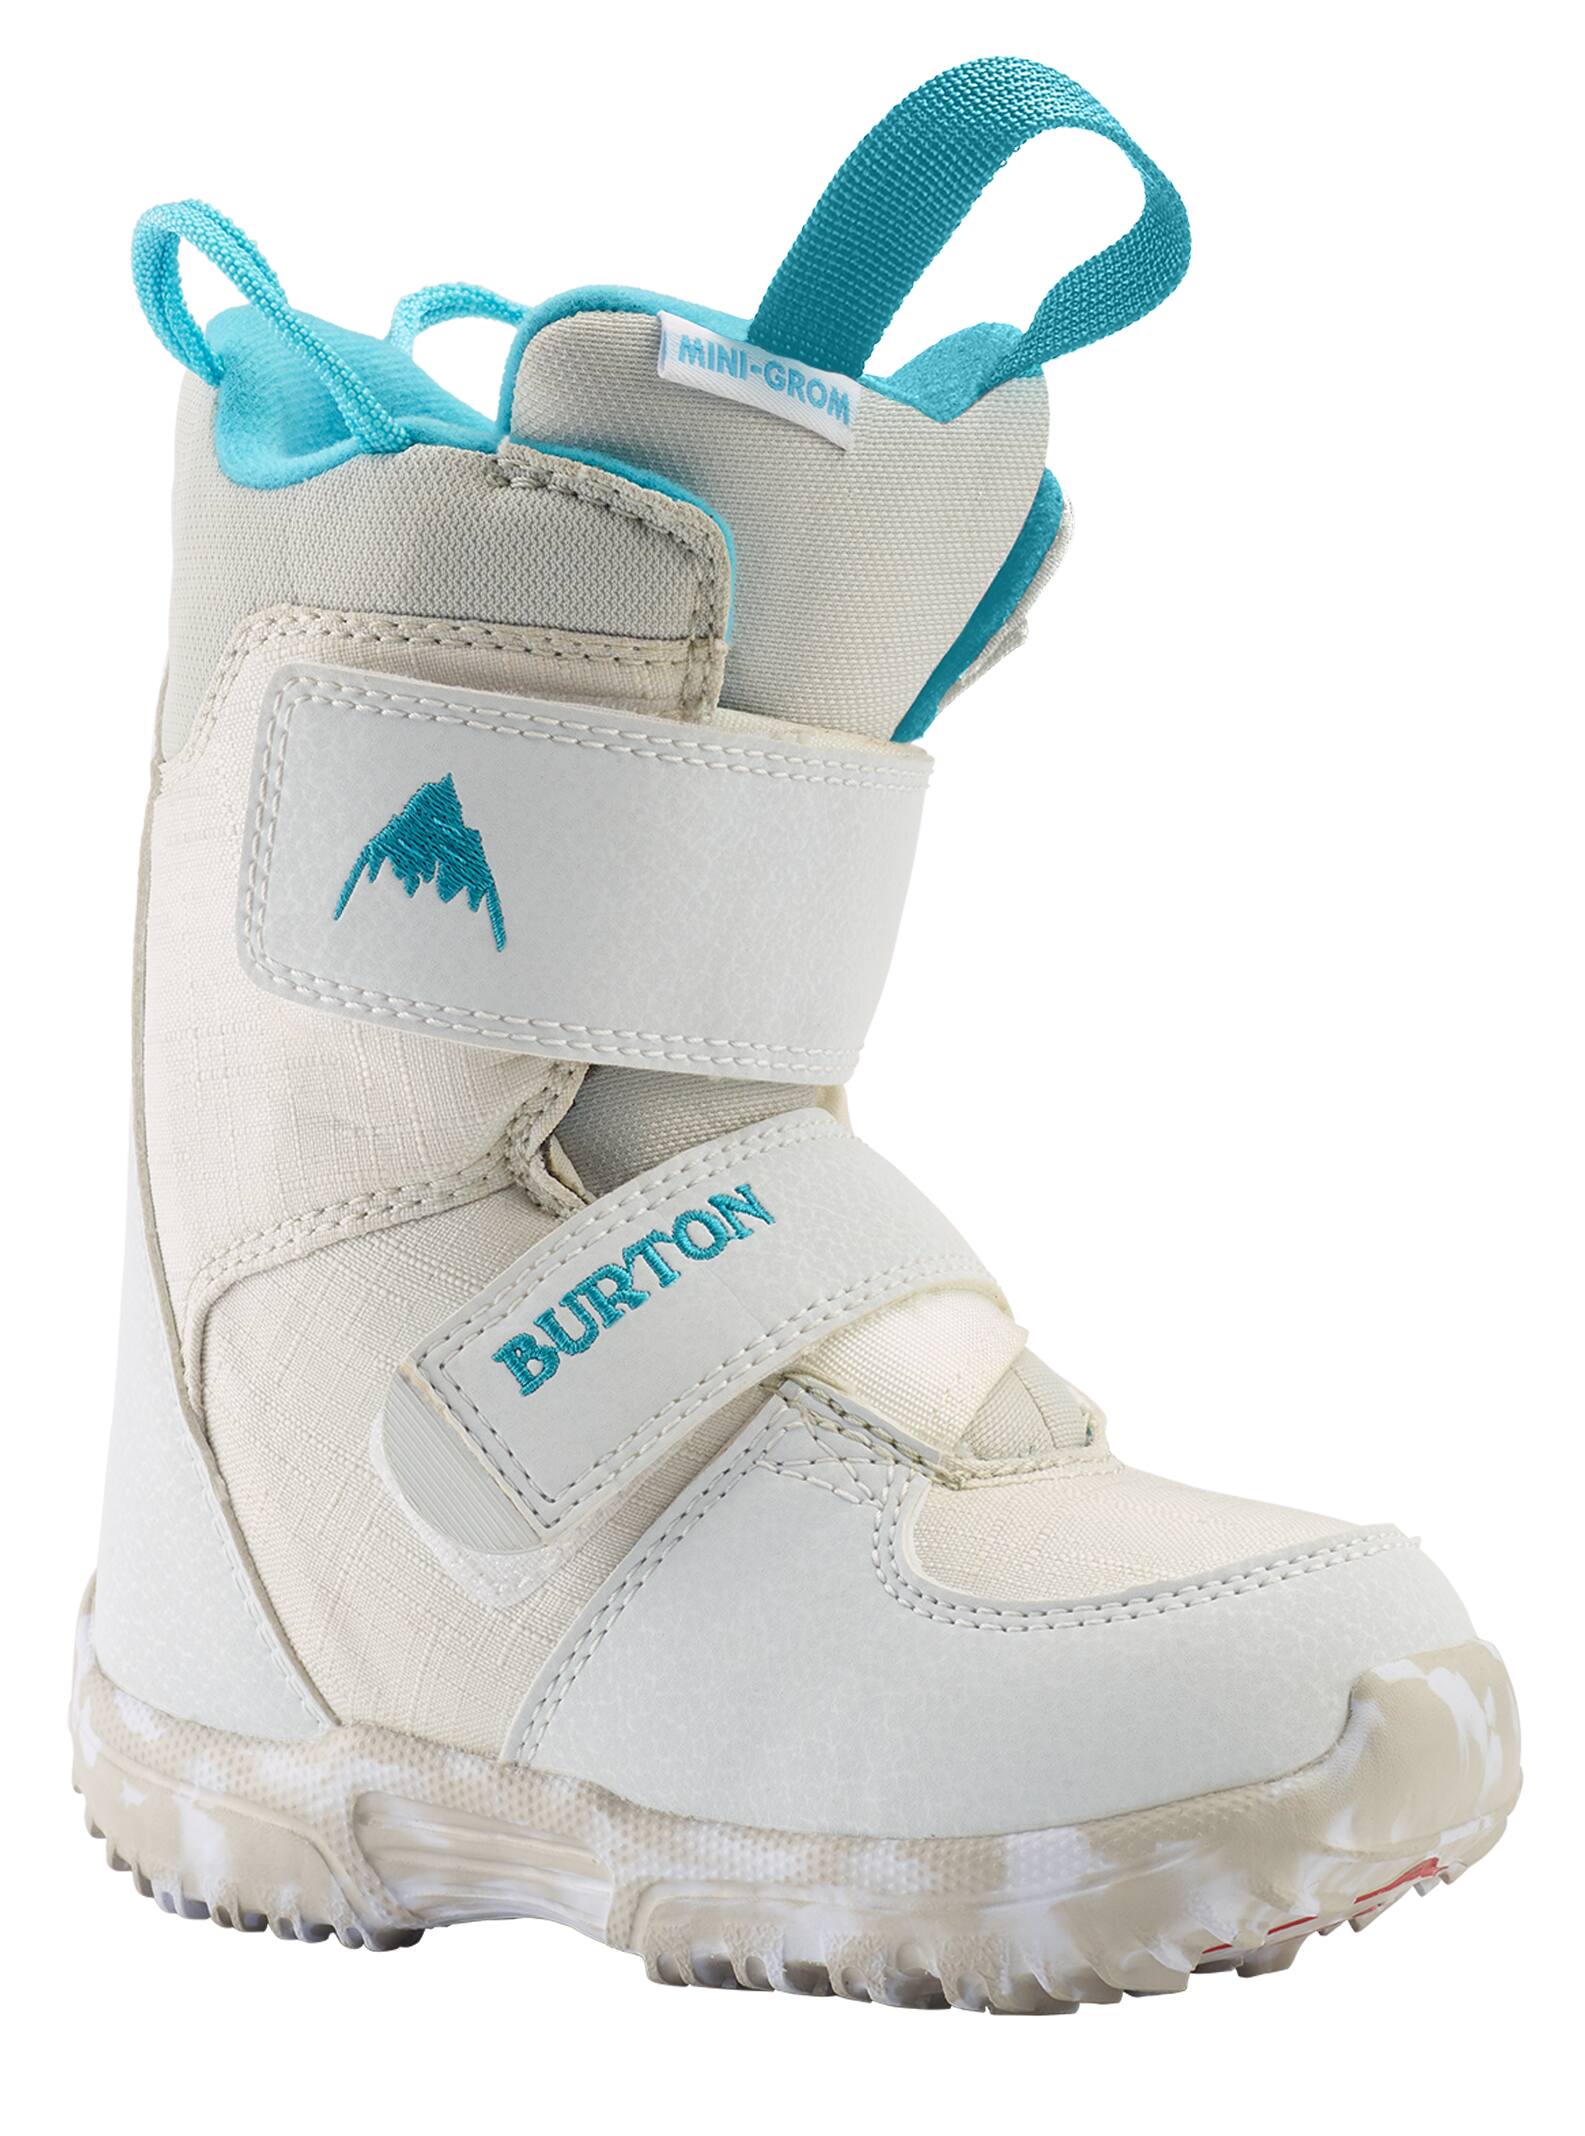 Burton - Boots de snowboard Mini-Grom tout-petit, White, 11C